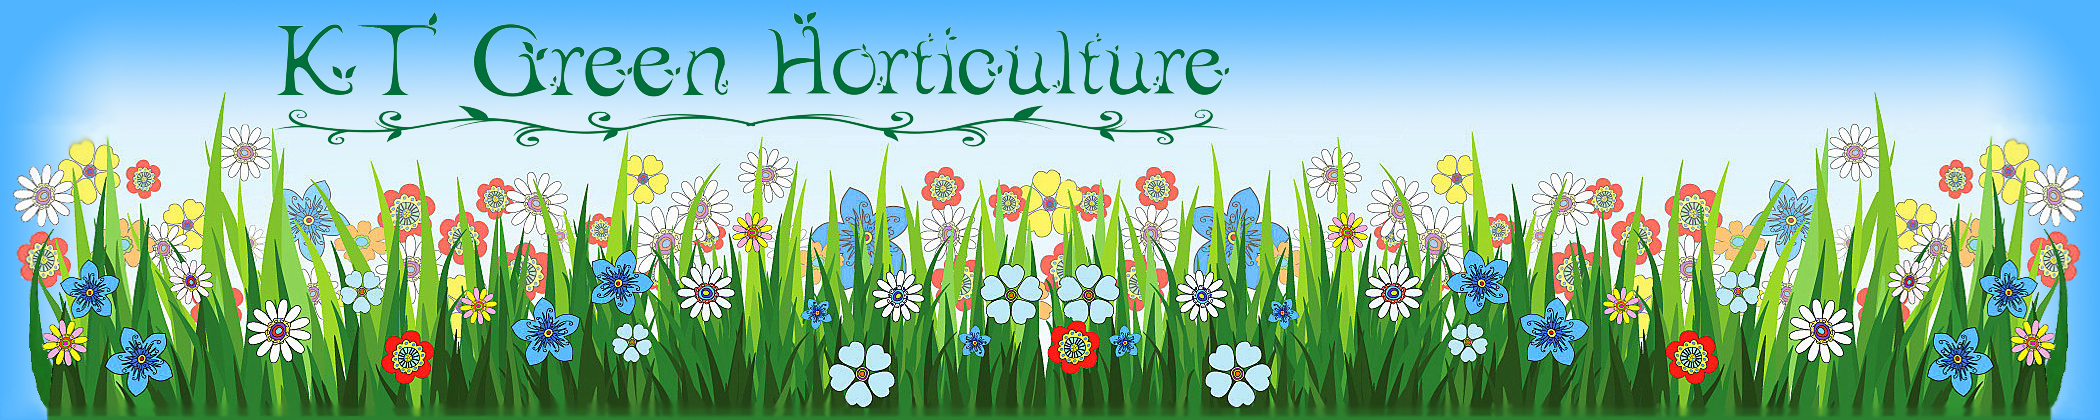 KT Green Horticulture header